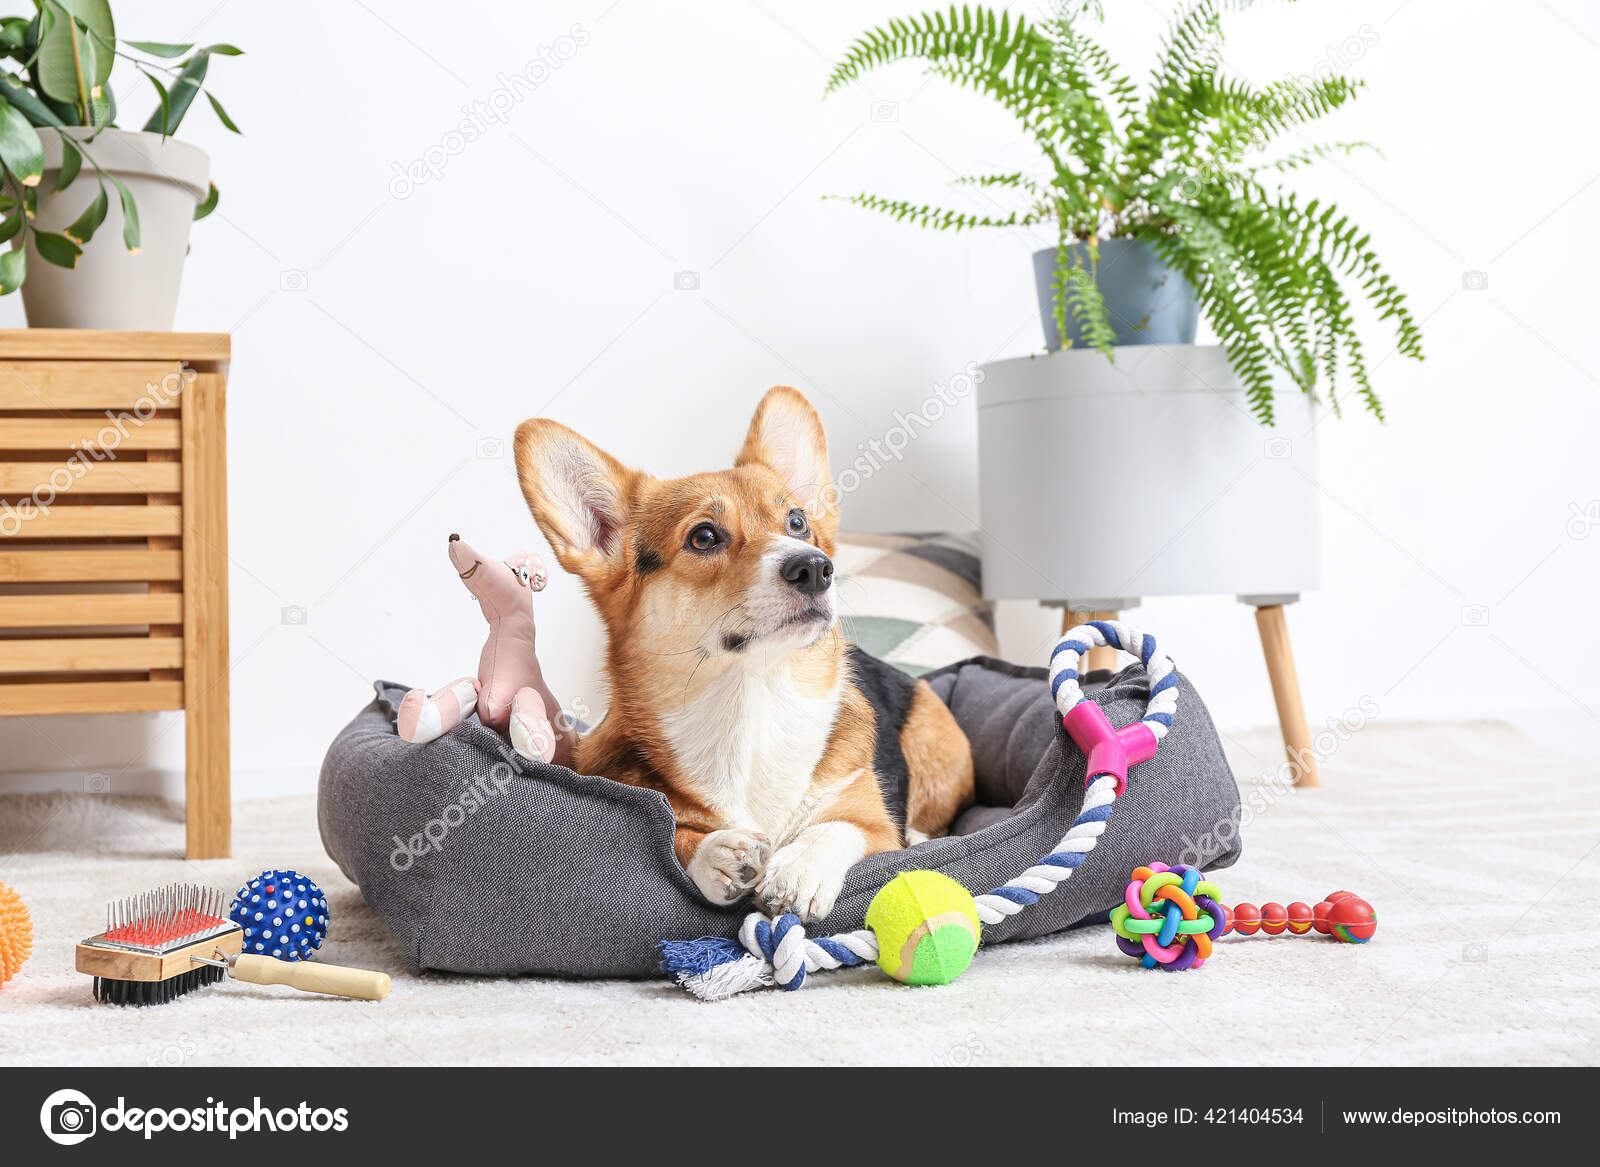 https://st2.depositphotos.com/10614052/42140/i/1600/depositphotos_421404534-stock-photo-cute-dog-different-pet-accessories.jpg